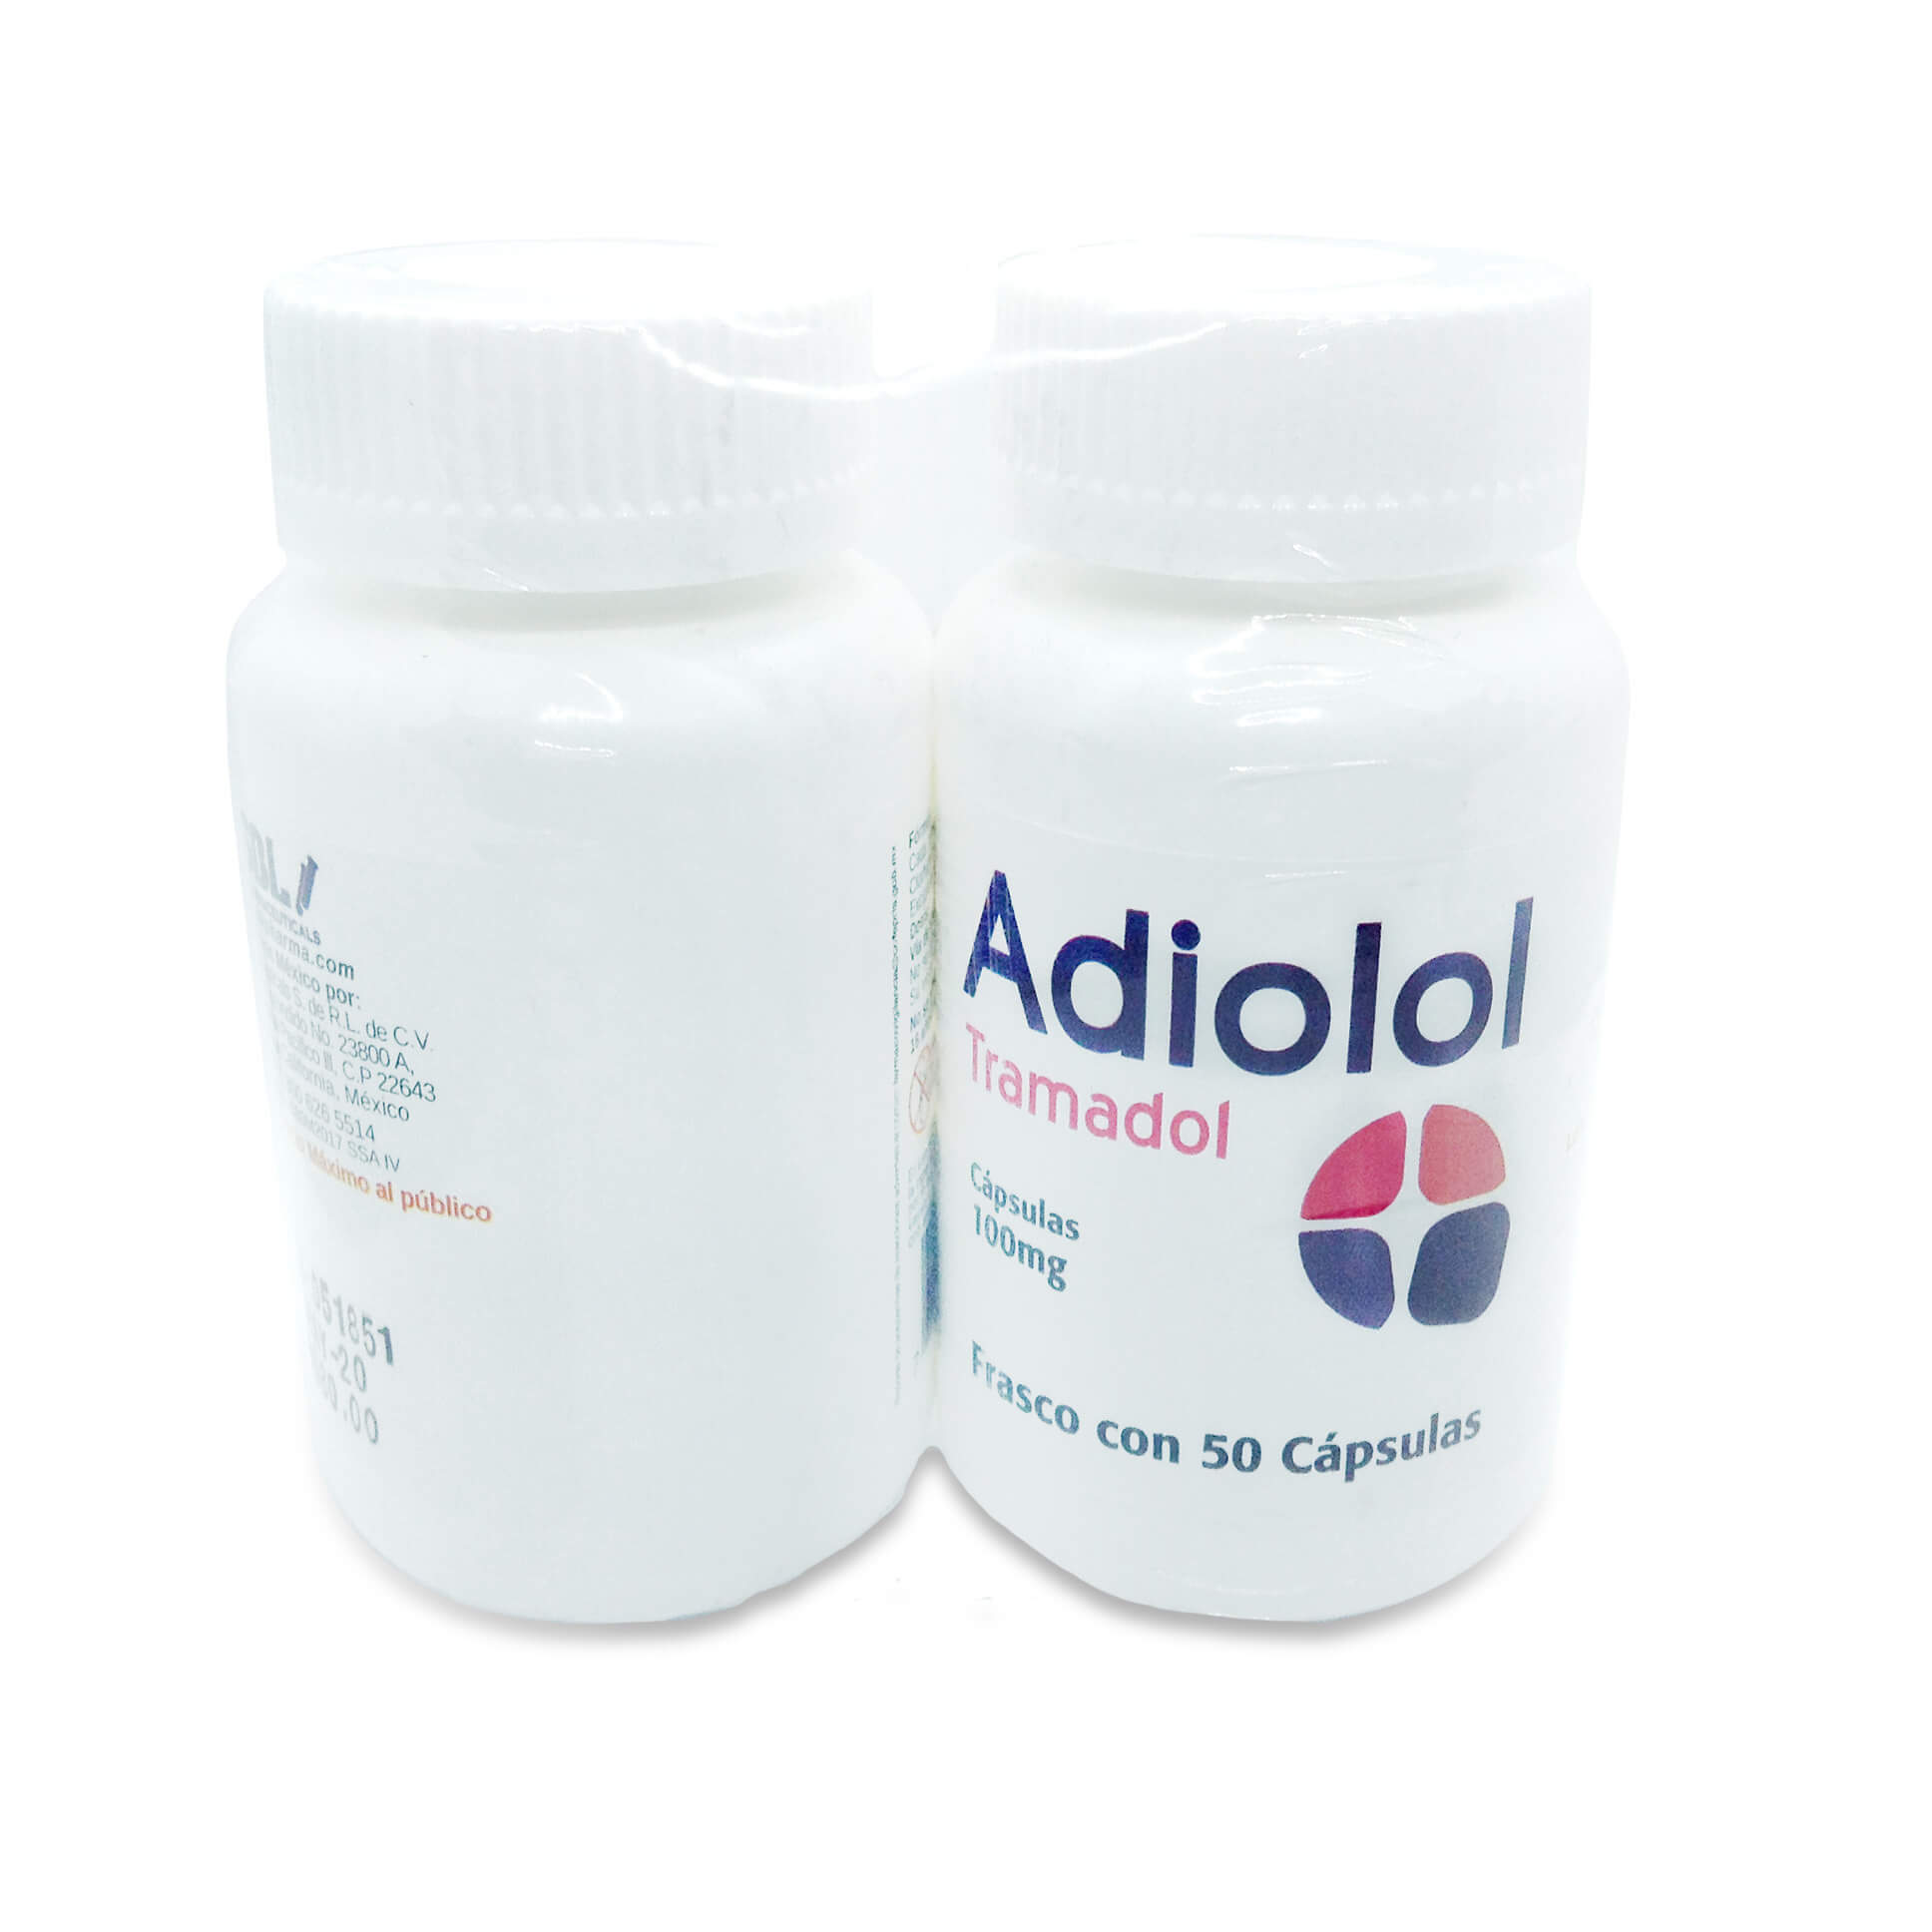 Adiolol tramadol 100mg capsules